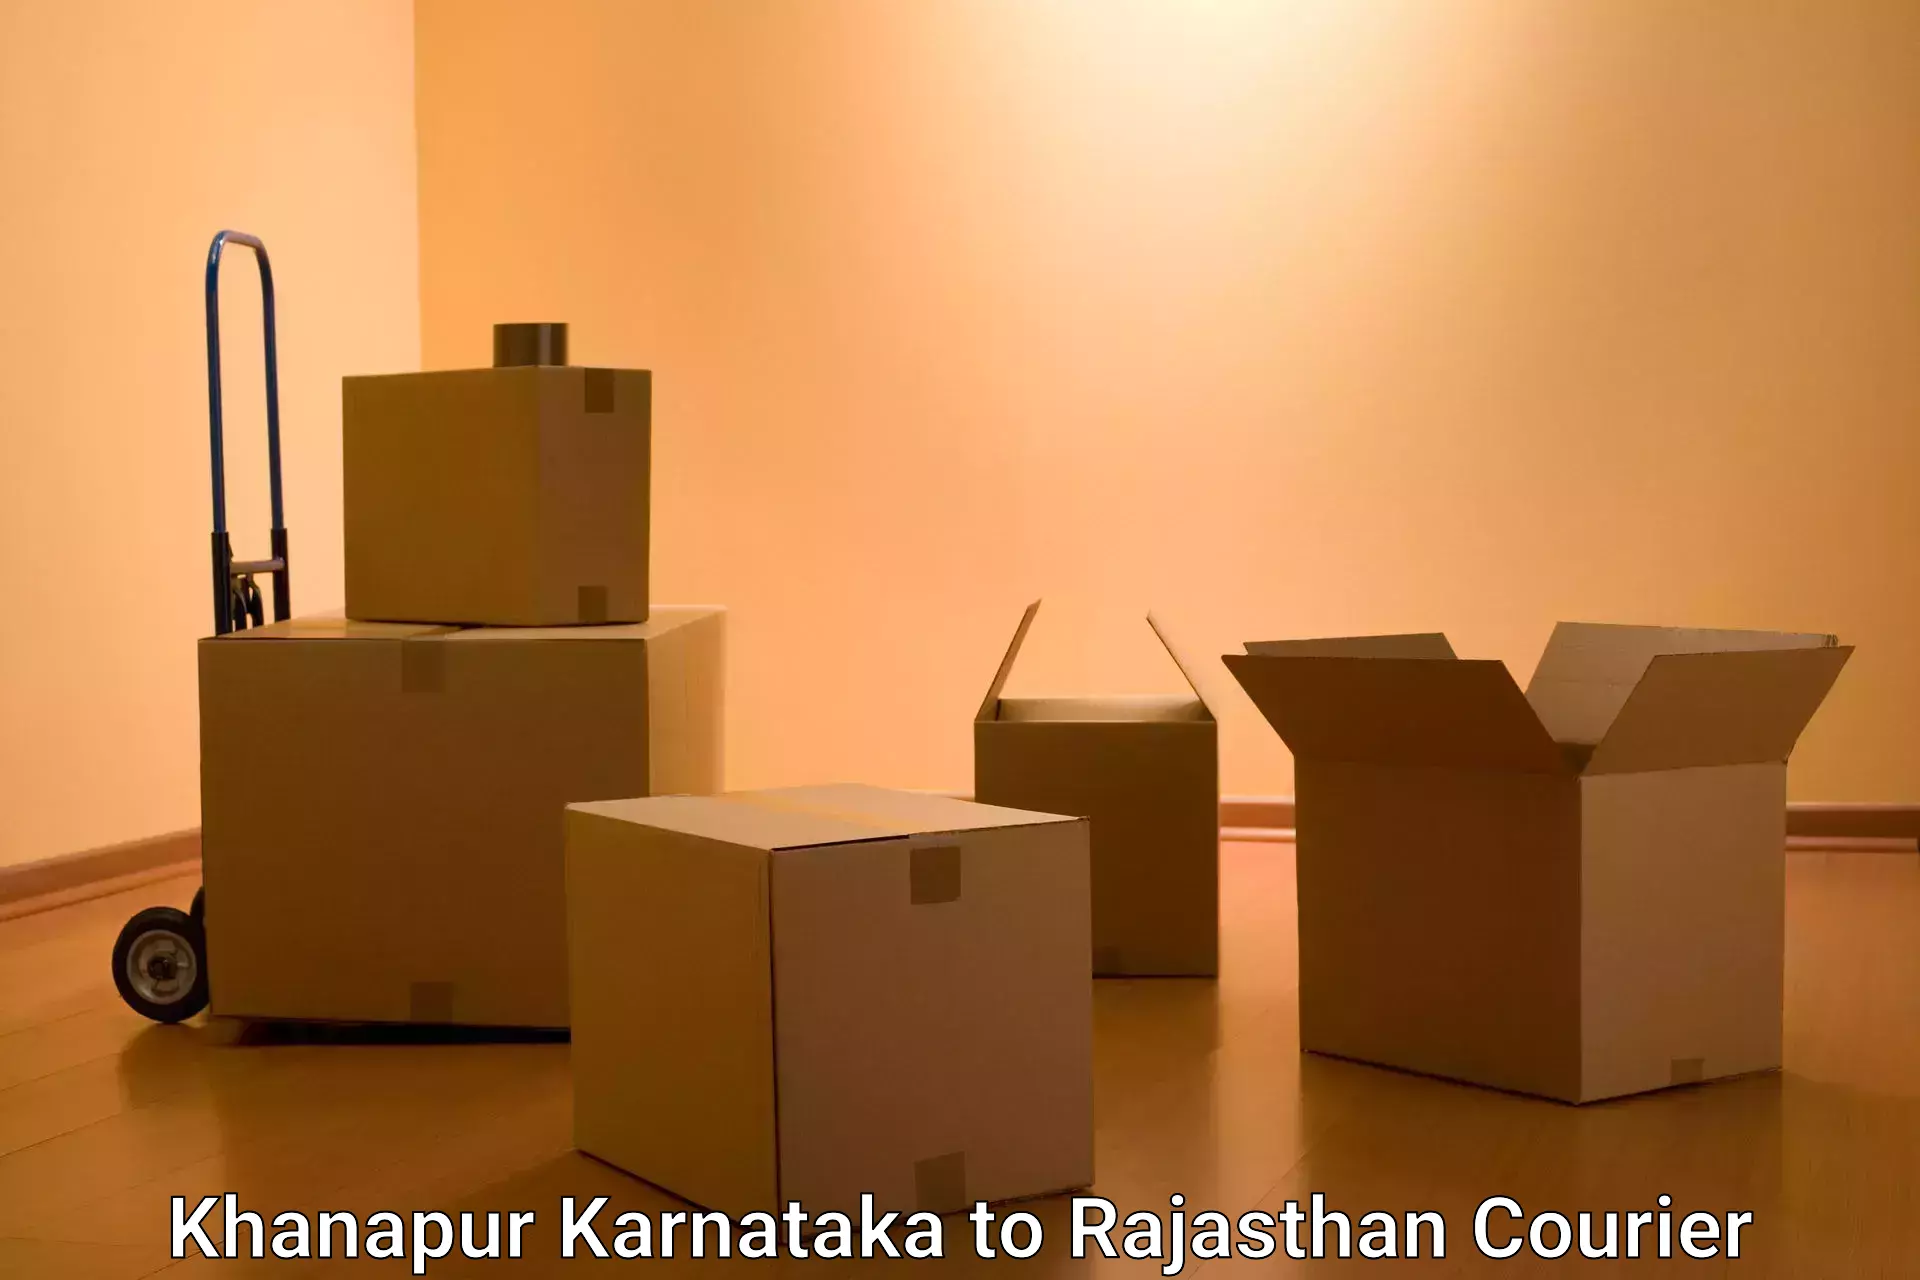 Door-to-door freight service Khanapur Karnataka to Raila